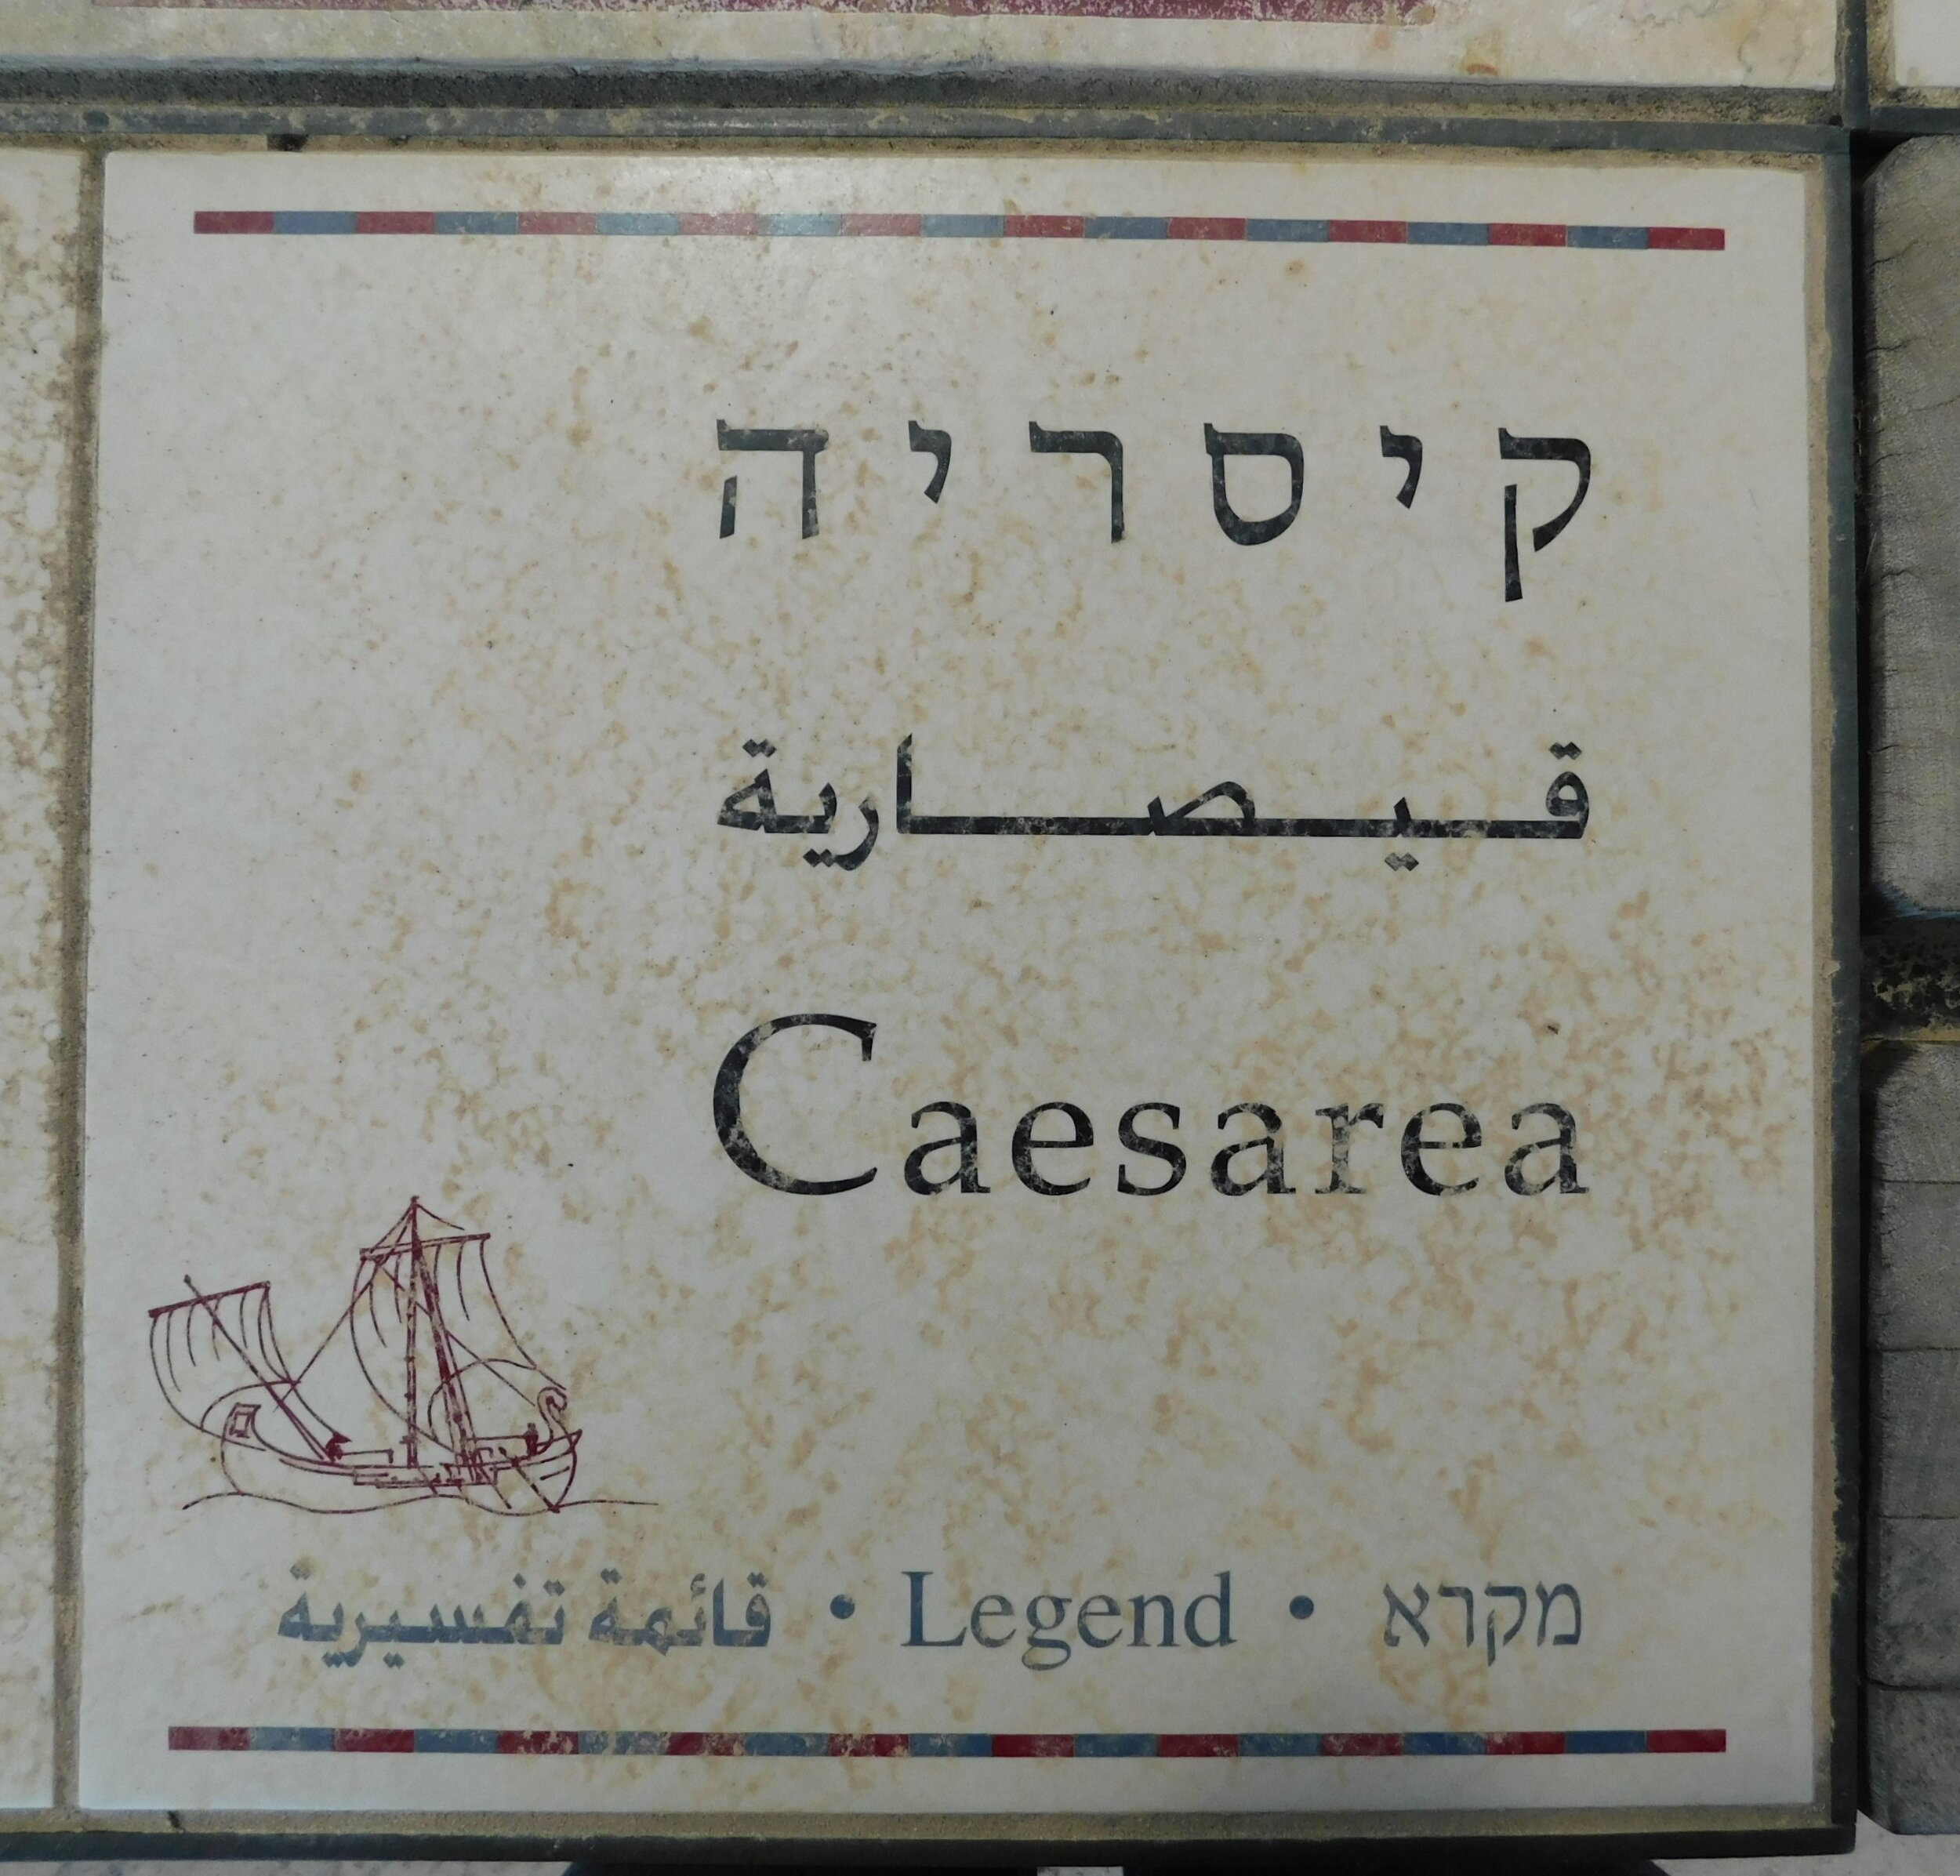 DSCN0635 Caesarea sign.JPG